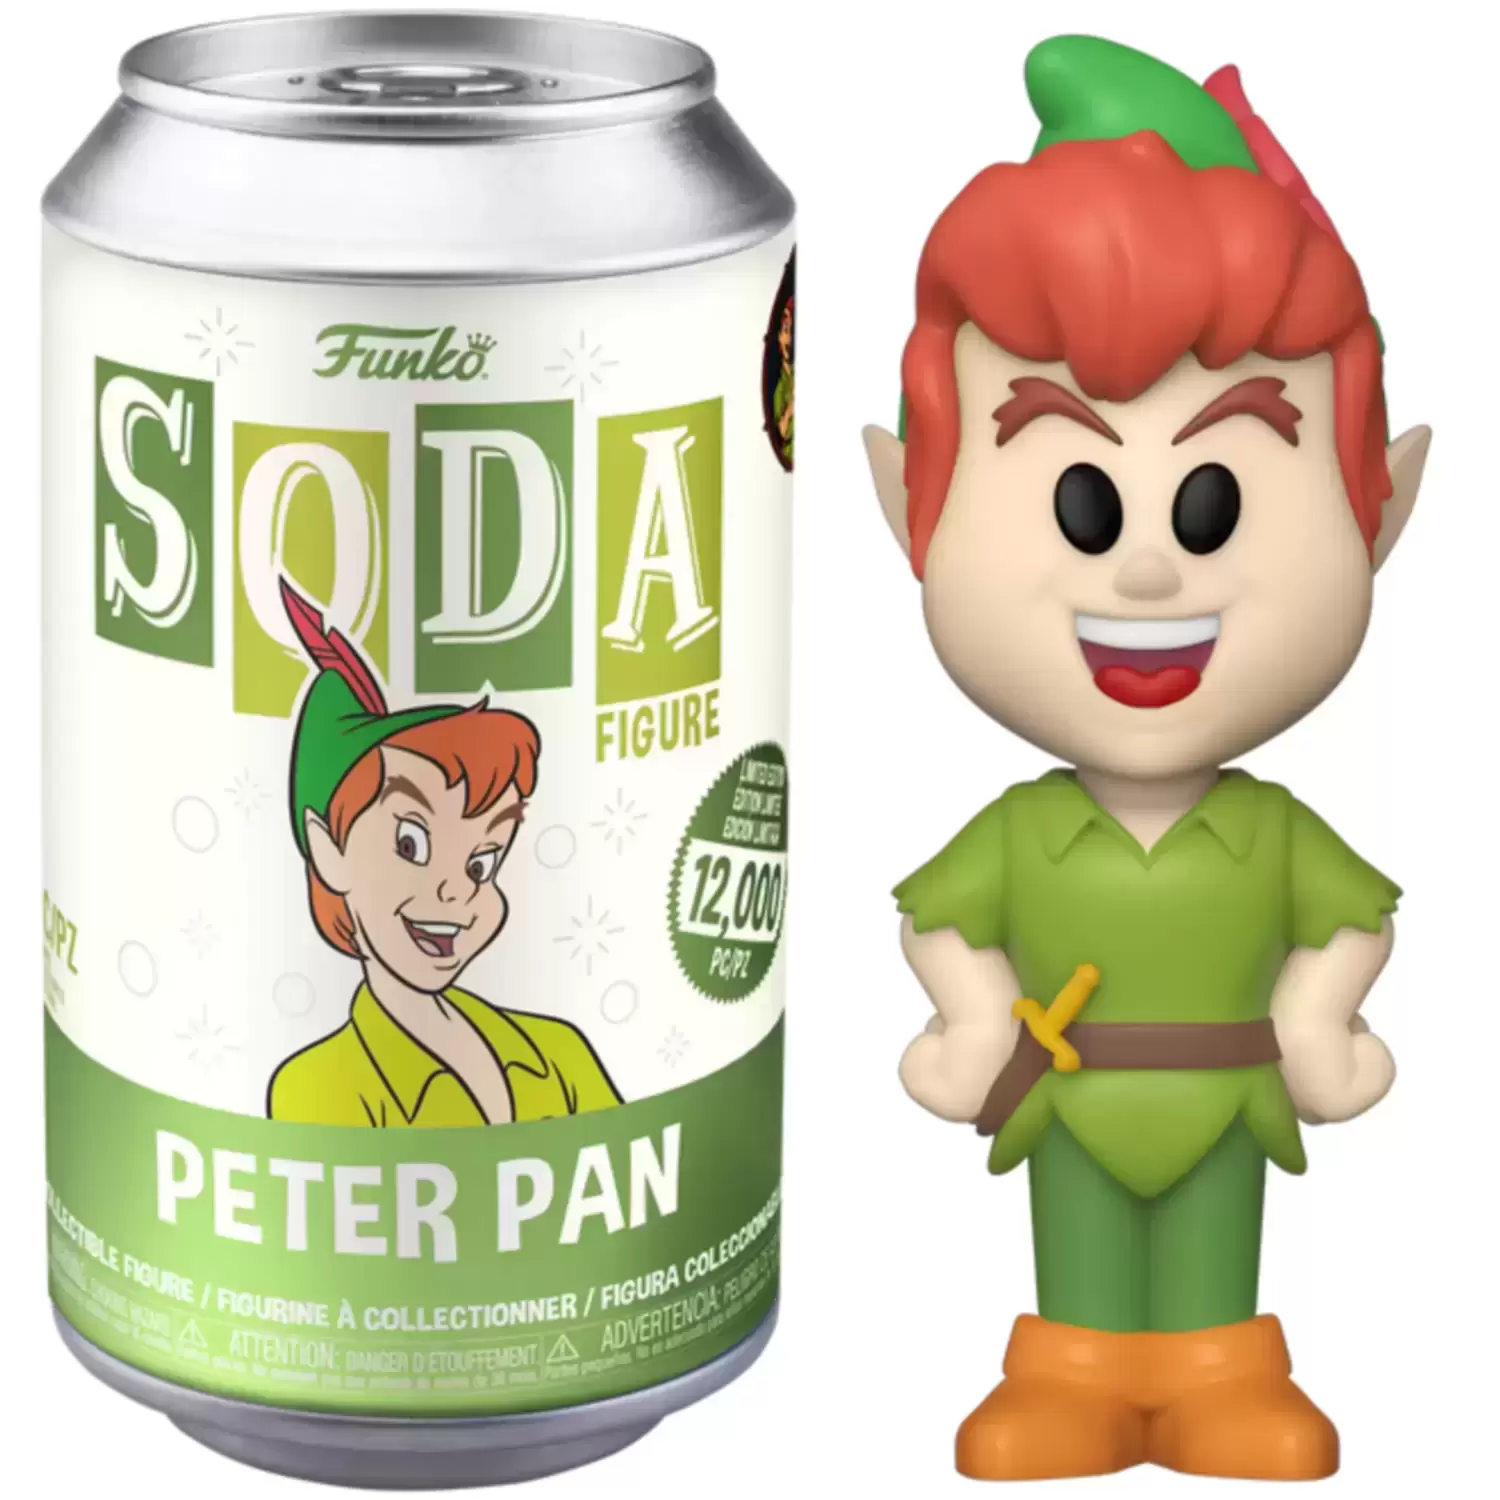 Vinyl Soda! - Peter Pan